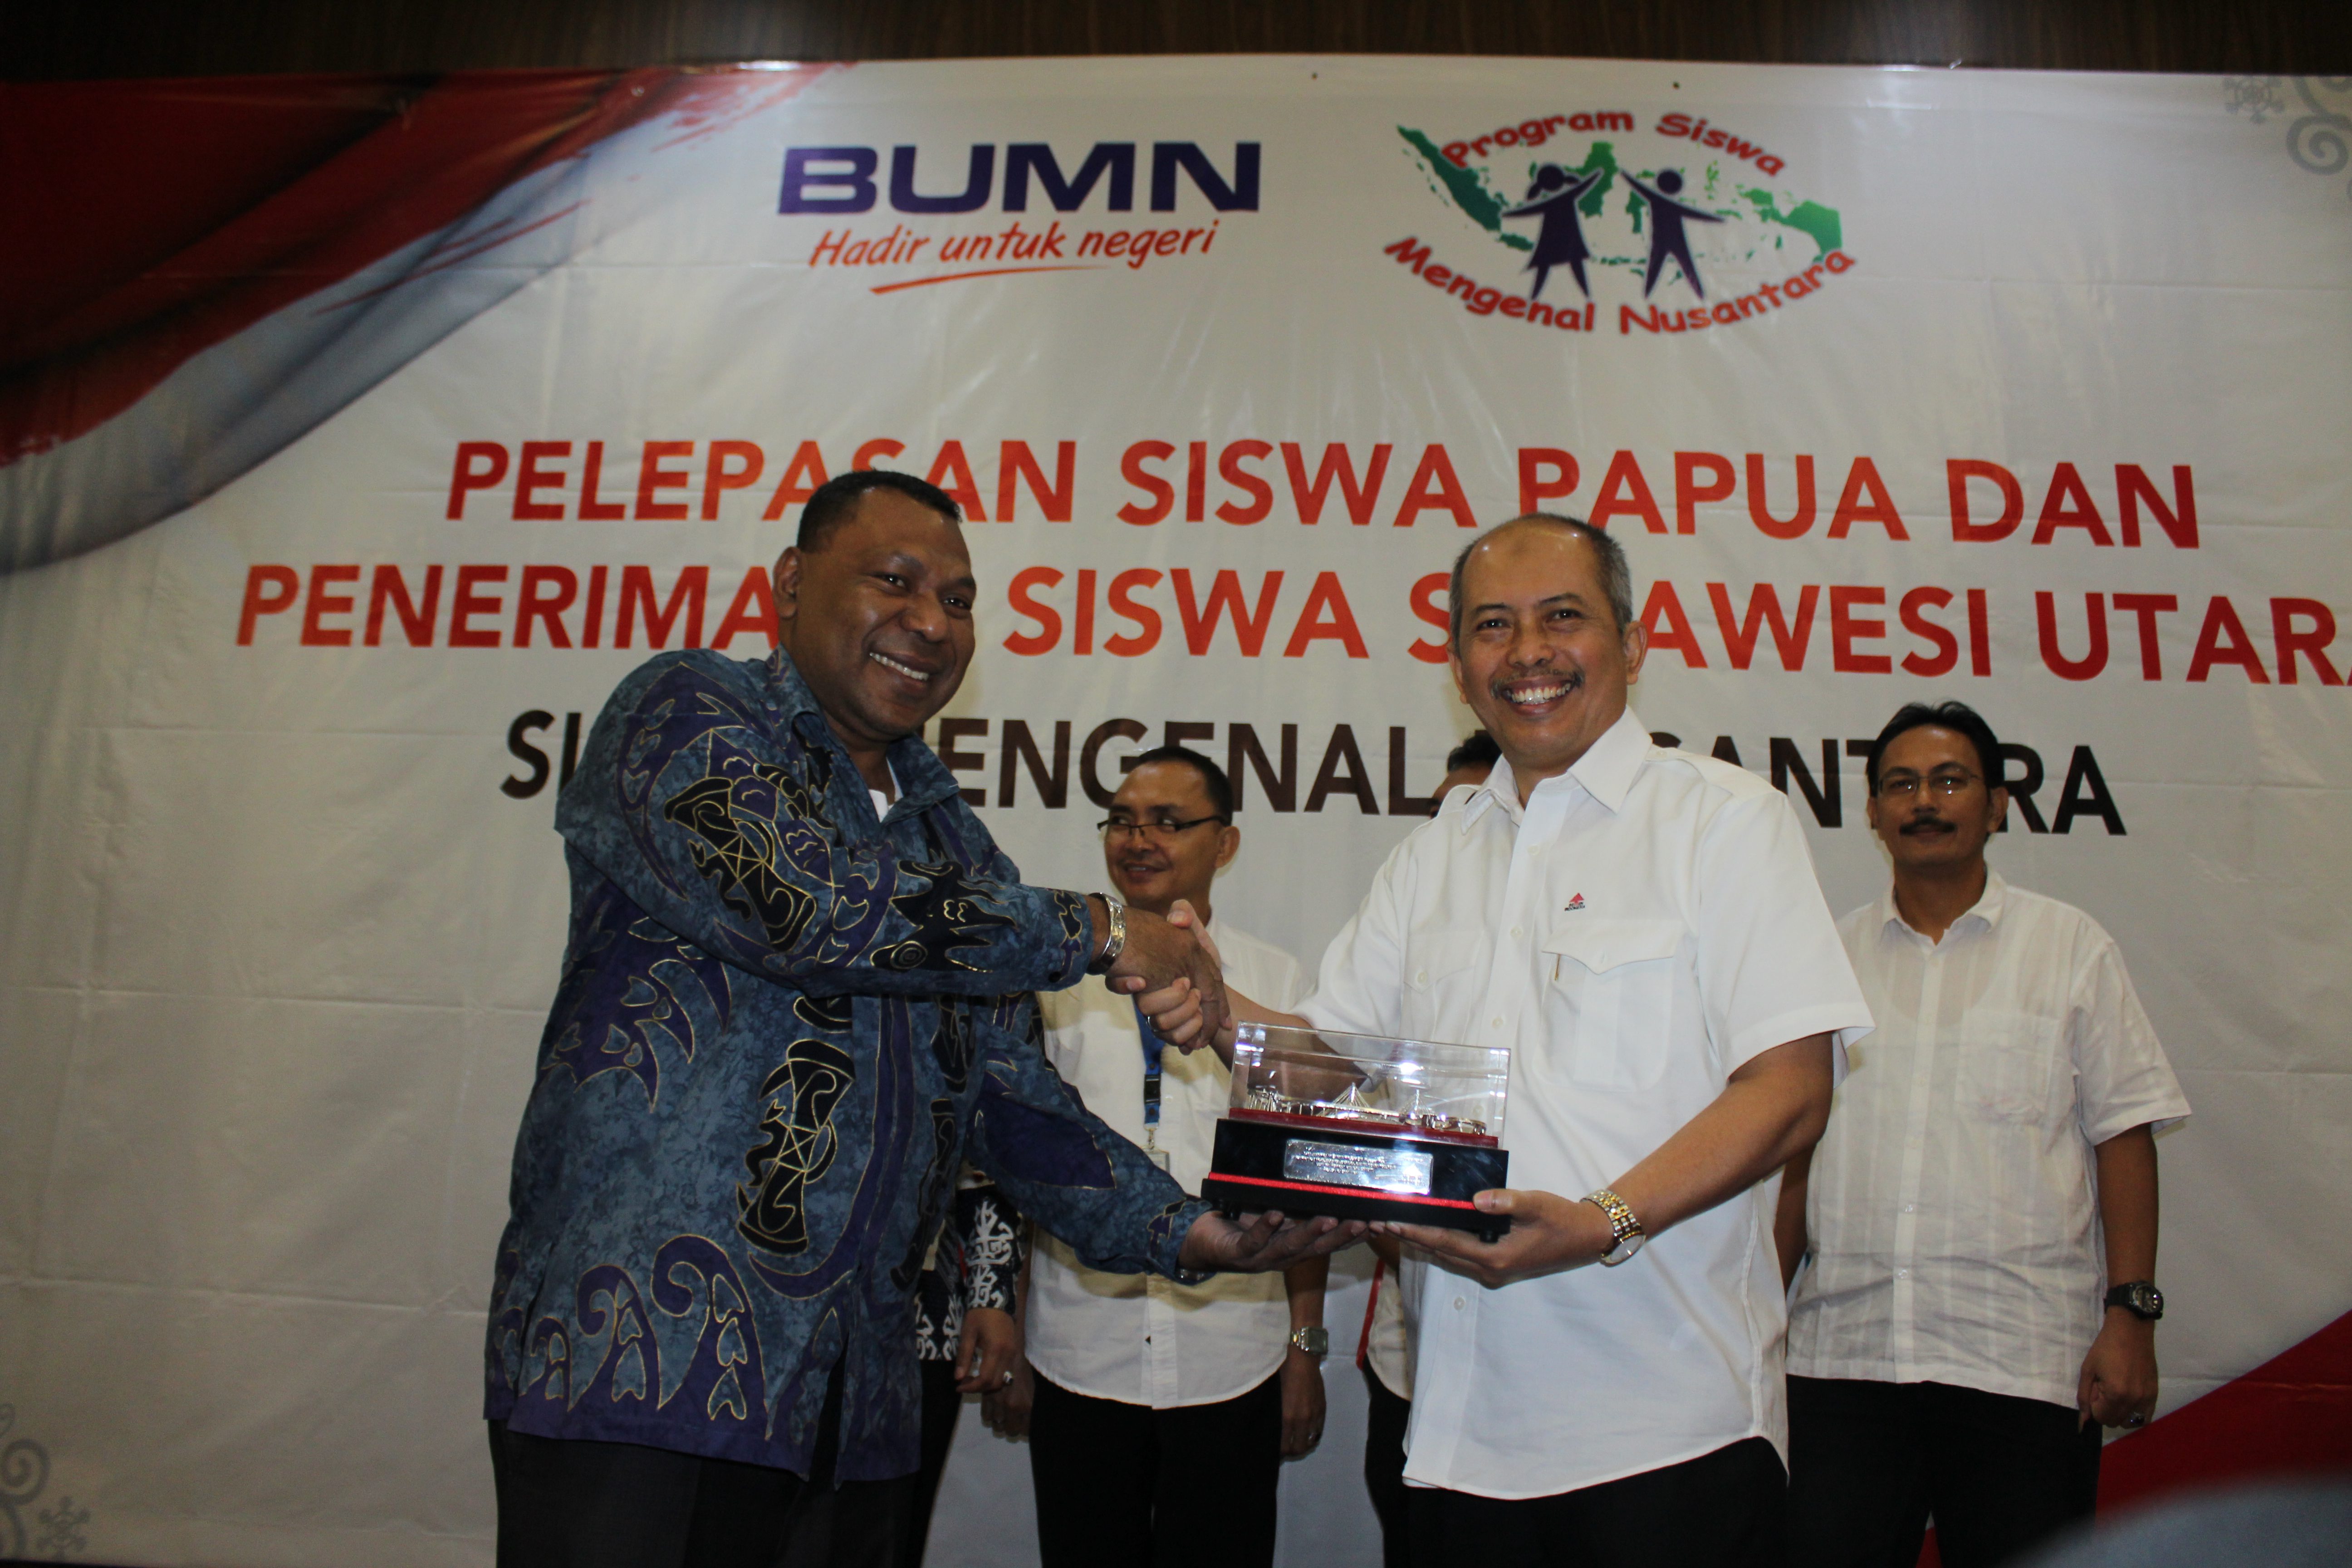 31 Siswa Asal Sulawesi Utara ke Papua Ikut Program Mengenal Nusantara